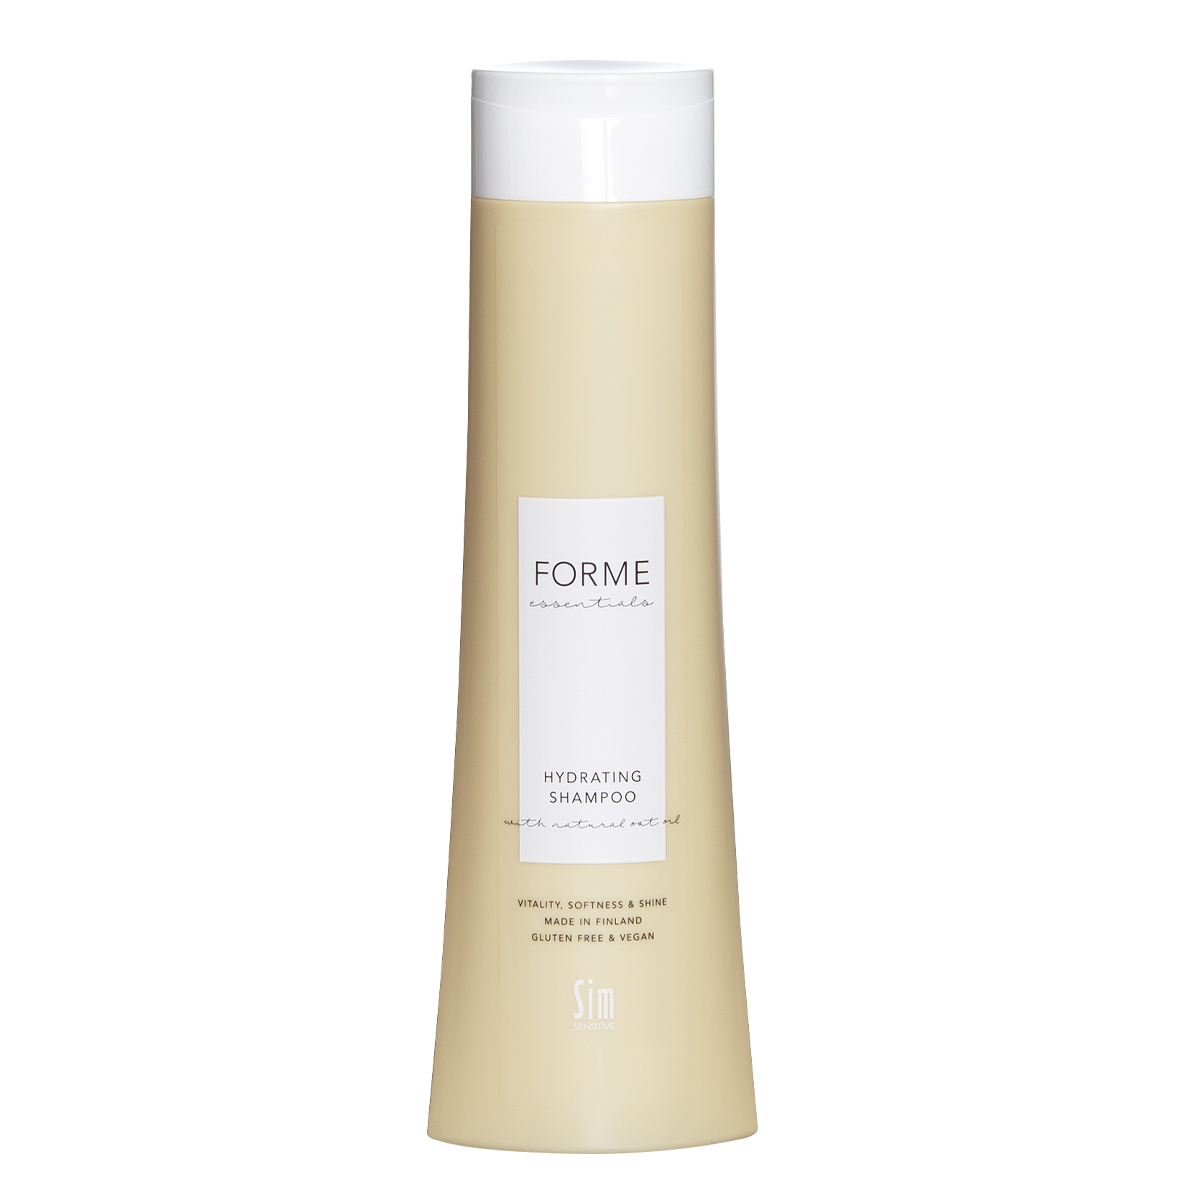 Купить Forme Essentials Hydrating Shampoo увлажняющий шампунь 300 мл (Forme Essentials, Hydrating)